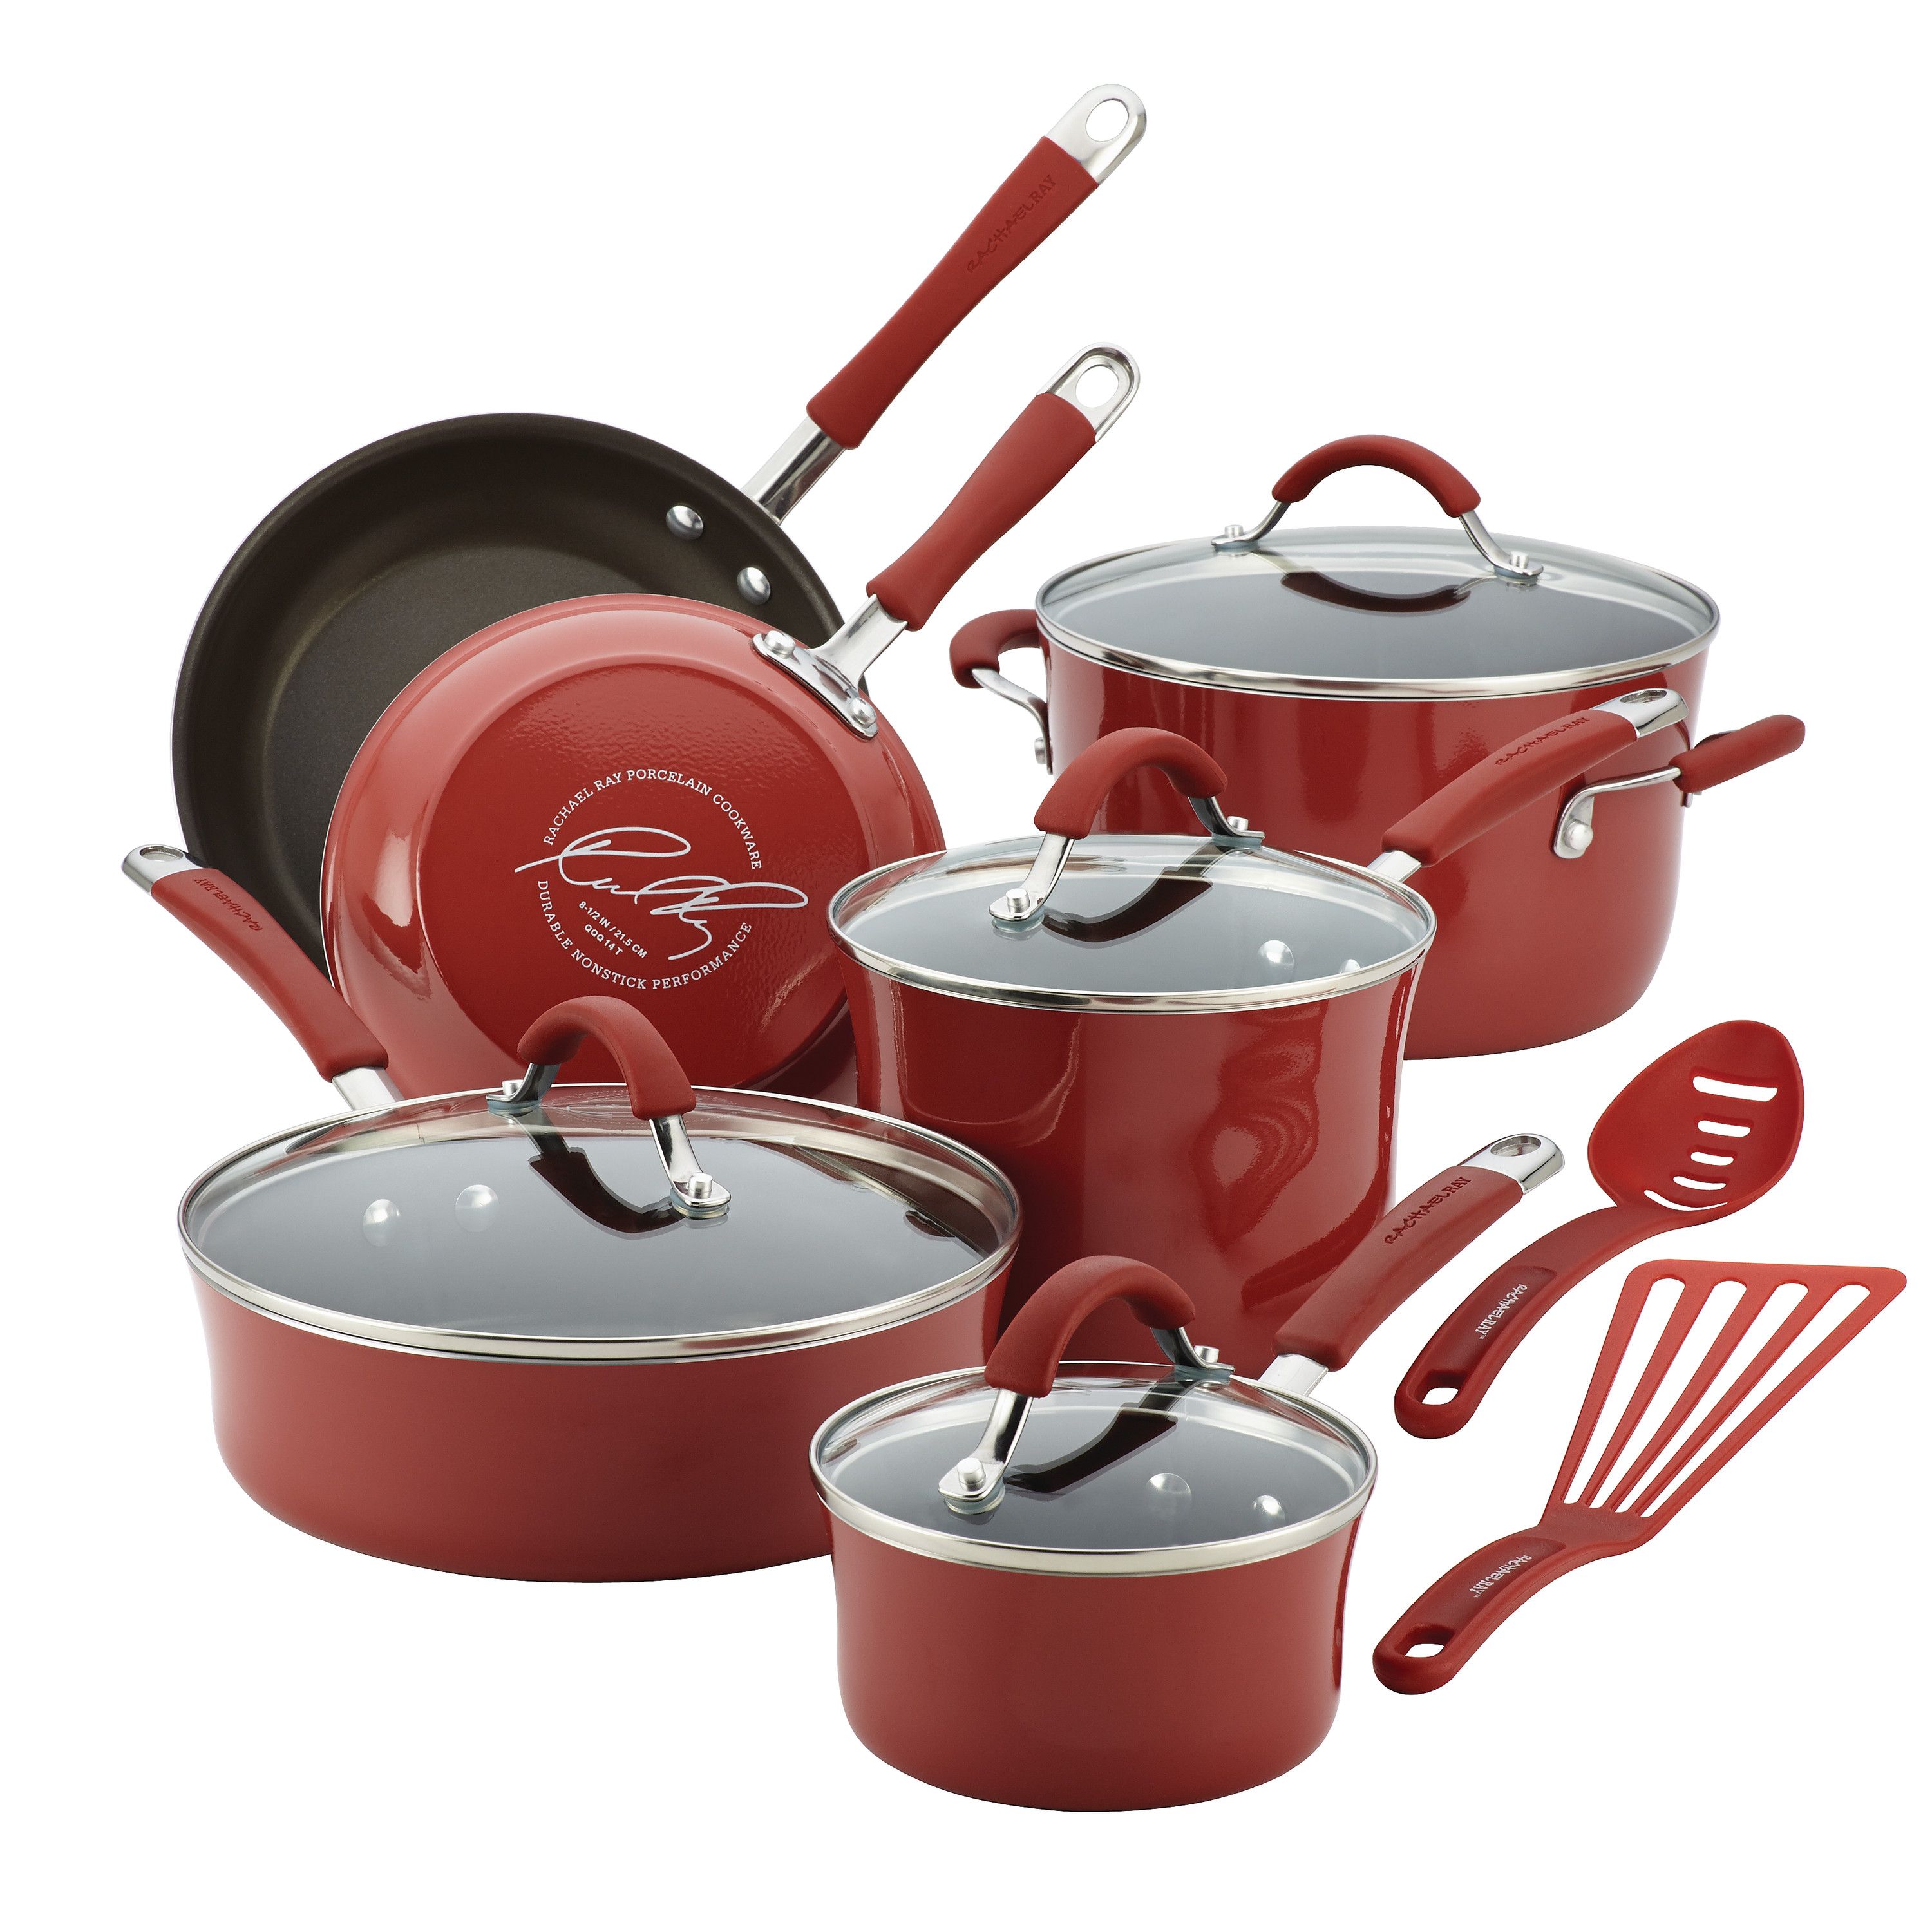 Vintage White & Red Enamel Cooking Pans Set of 3 Camping Rustic Pans